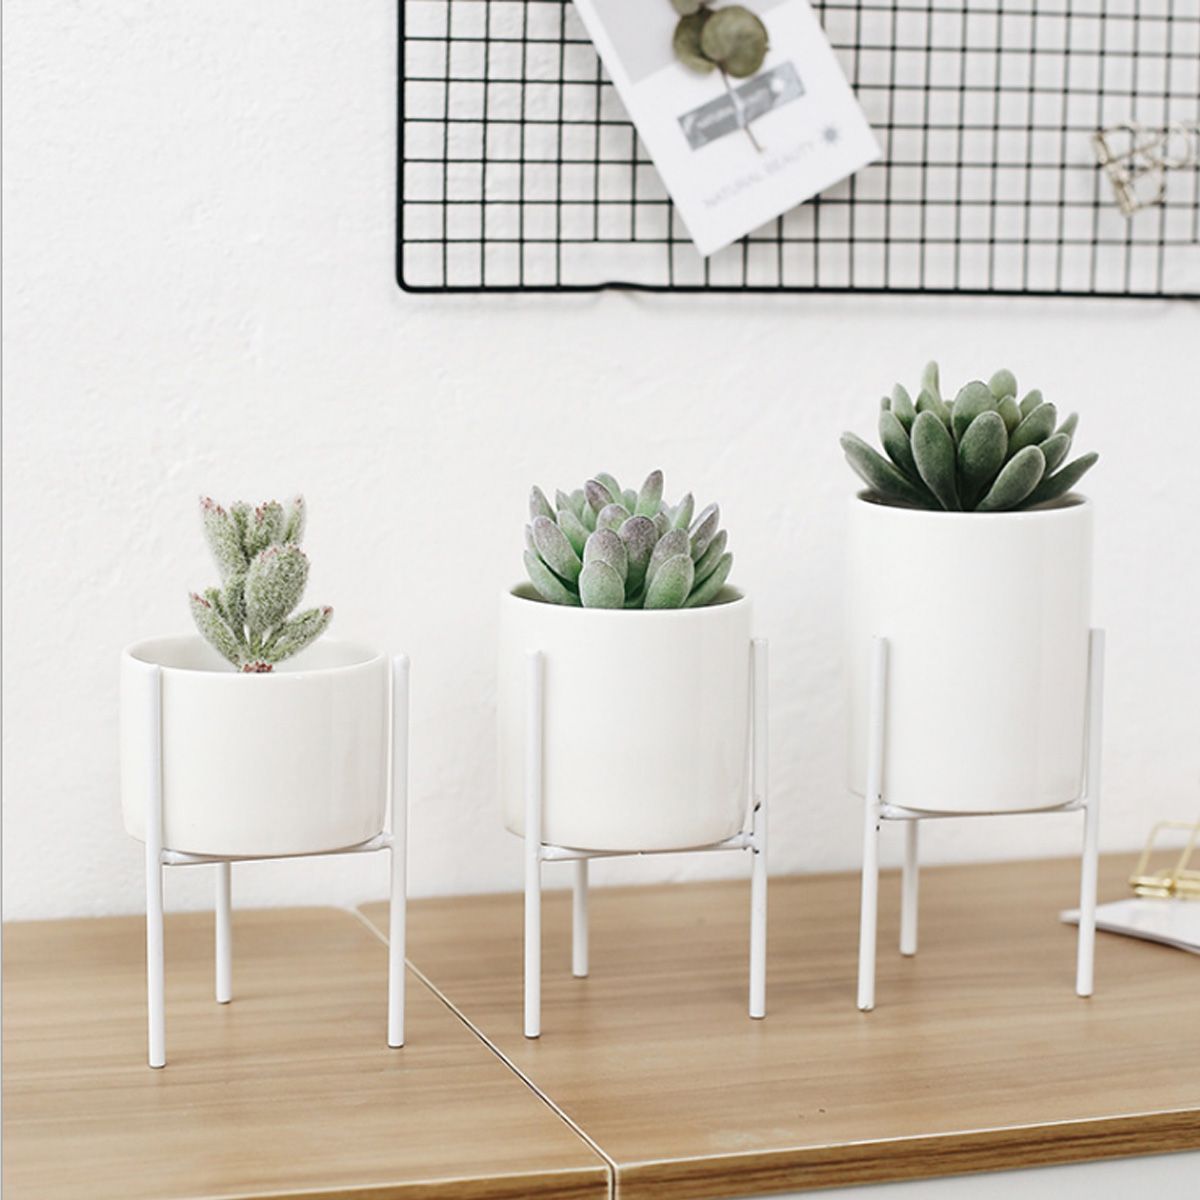 White-Ceramic-Flower-Pot-Plant-Succulent-Nordic-Rack-Display-Stand-Holder-Hydroponic-Planter-Decor-1332924